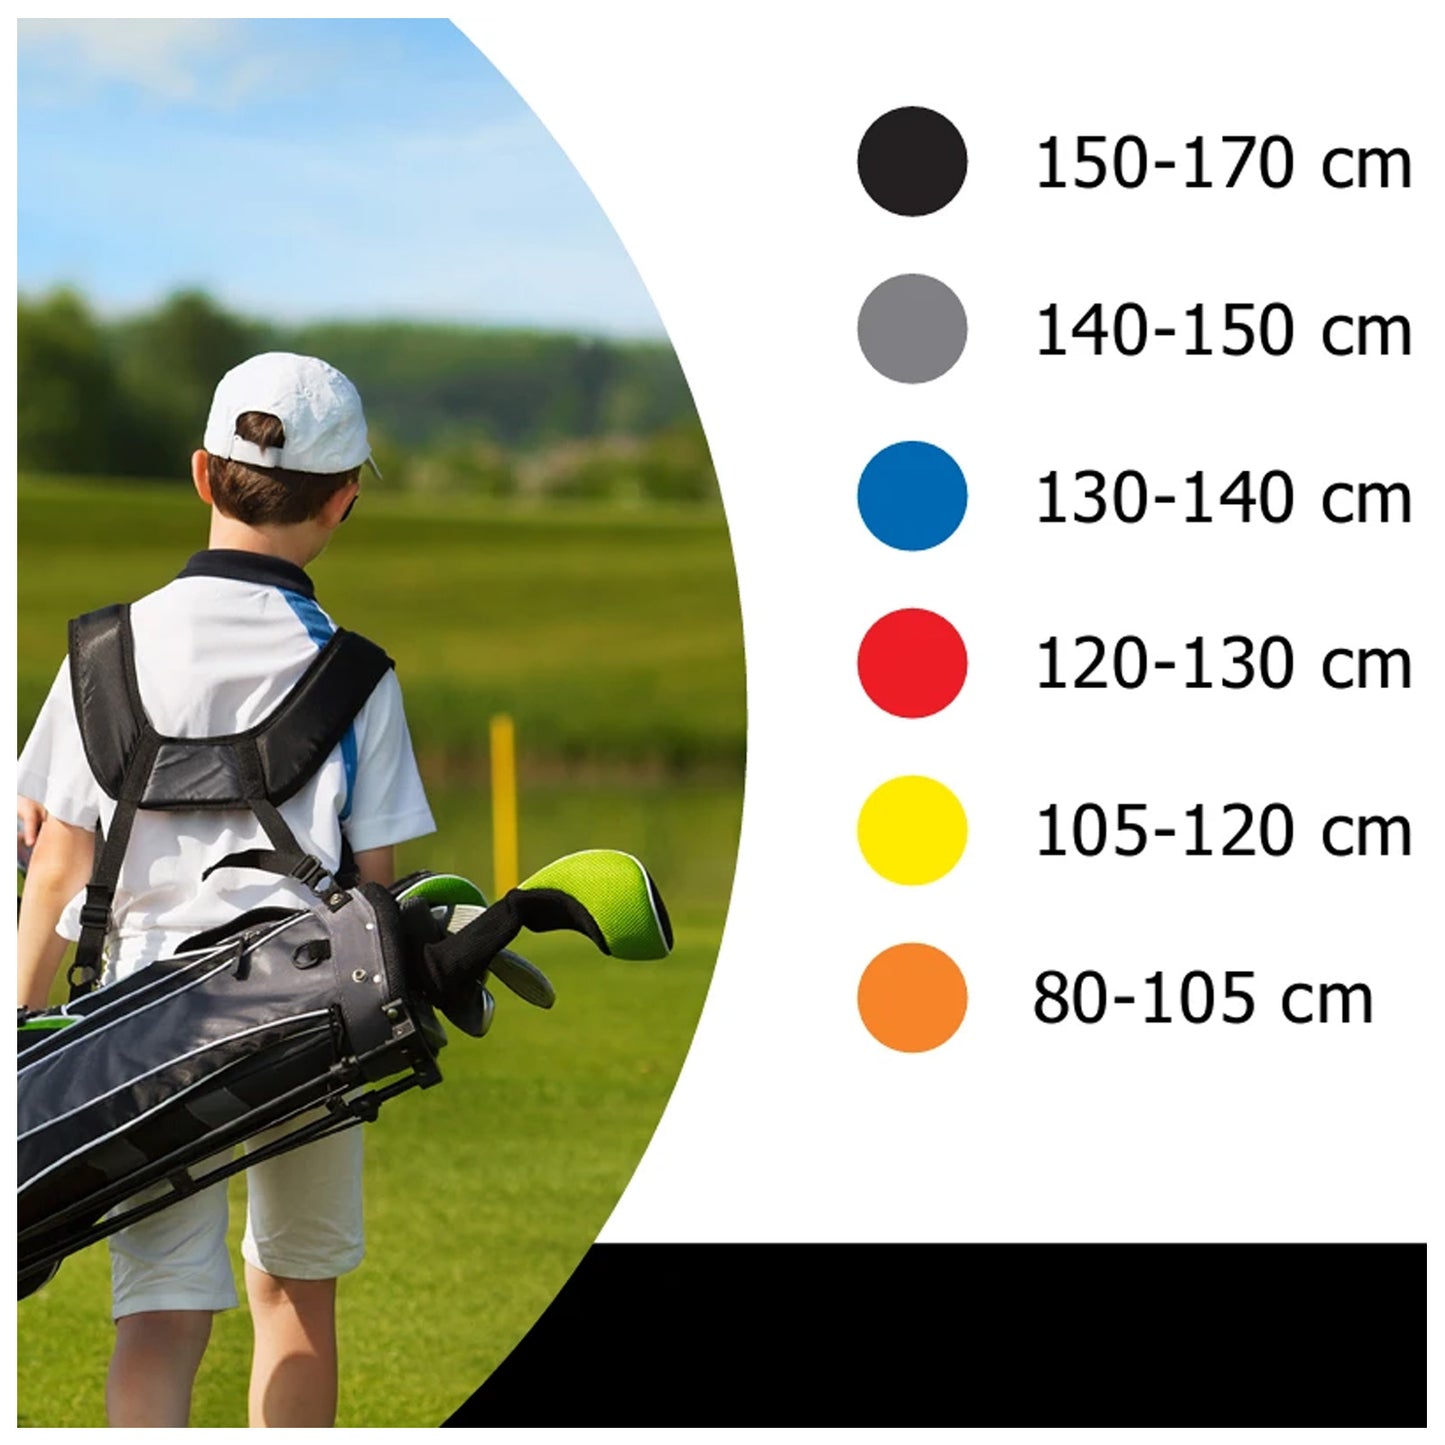 Left Handed Future Golf Junior Stand Bag Package Sets